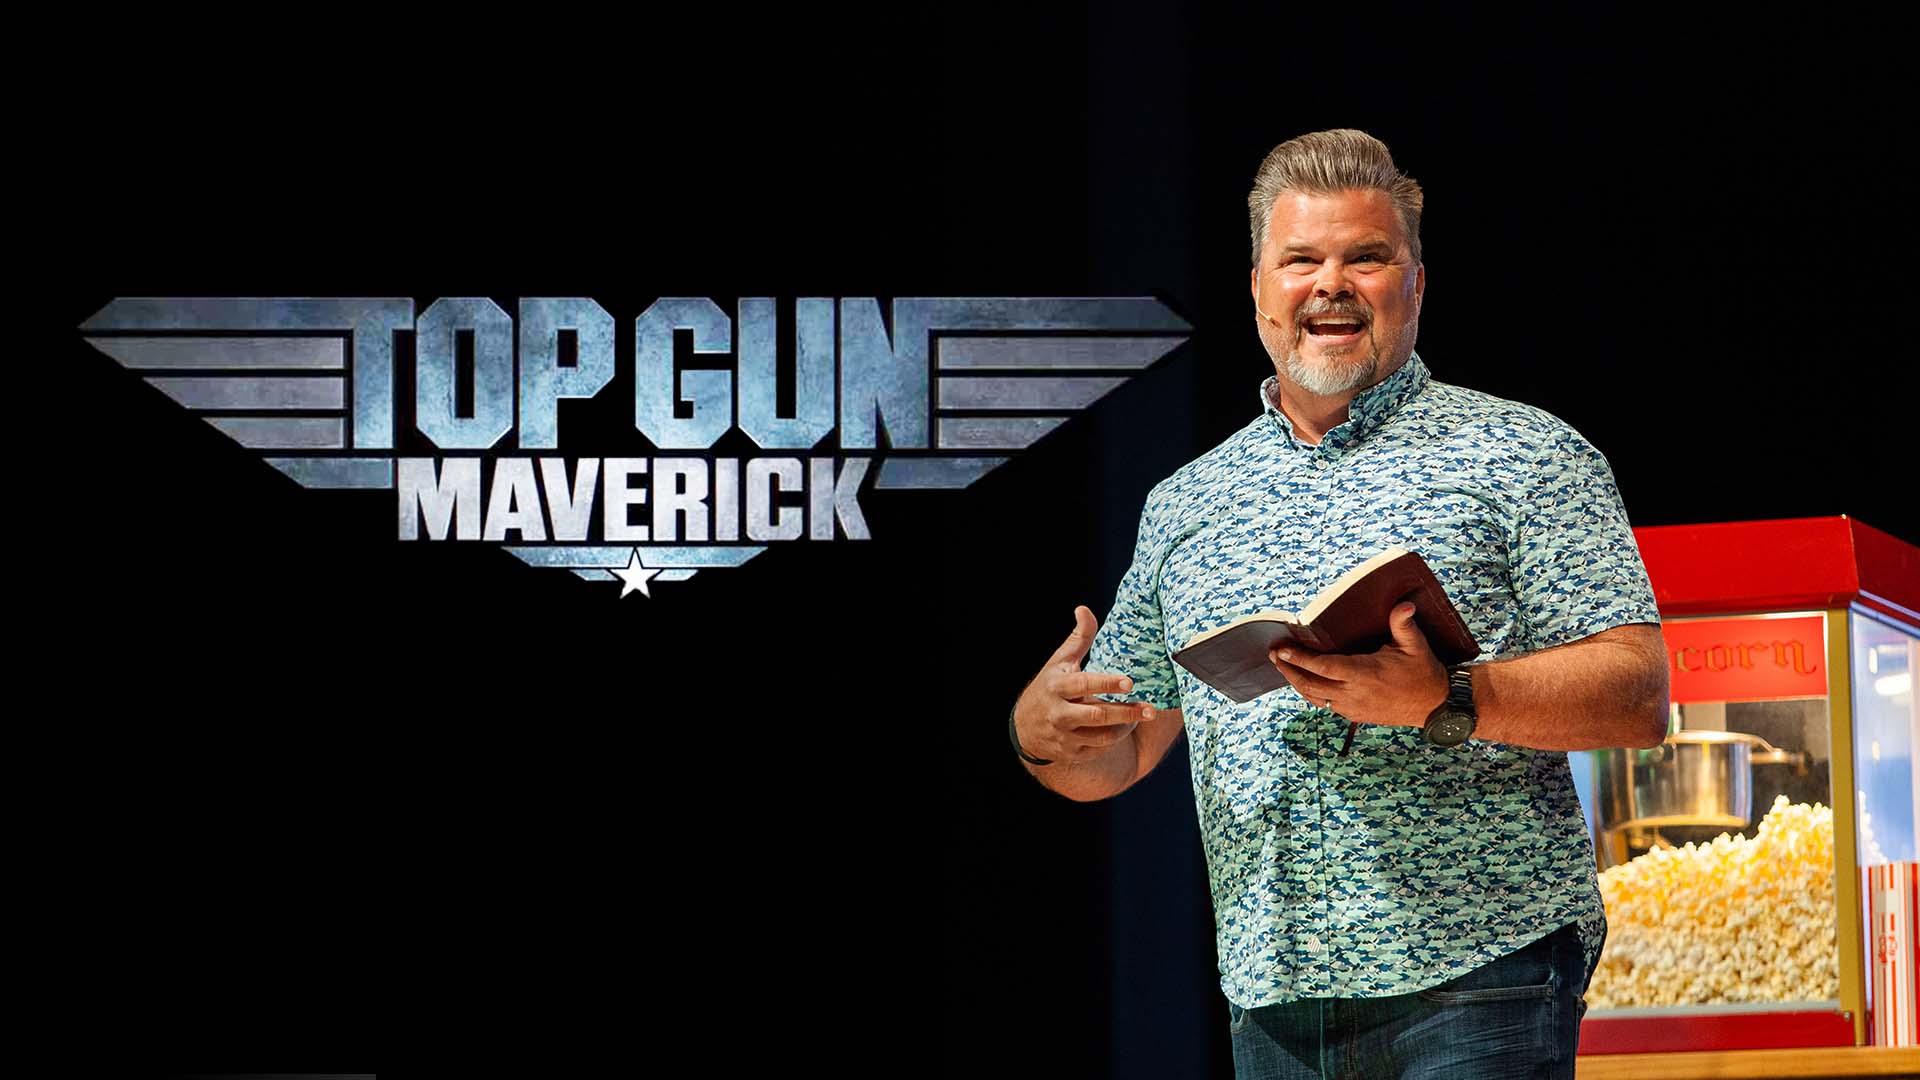 Lessons from Top Gun Maverick